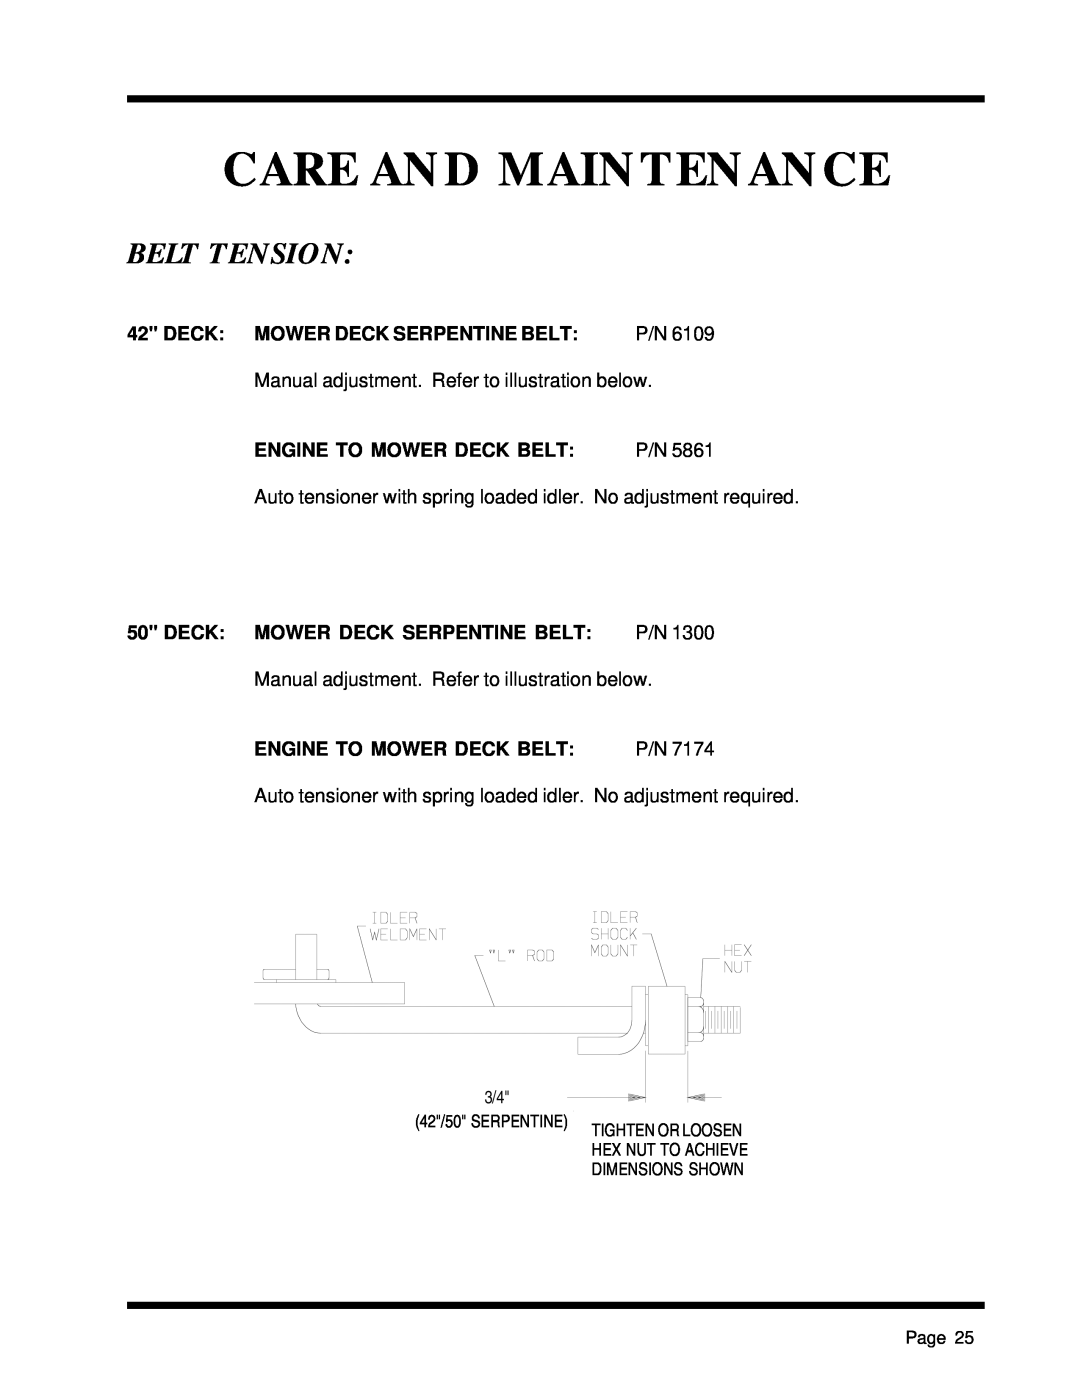 Dixon 1857-0599 manual Belt Tension, Care And Maintenance, Deck Mower Deck Serpentine Belt, Engine To Mower Deck Belt 